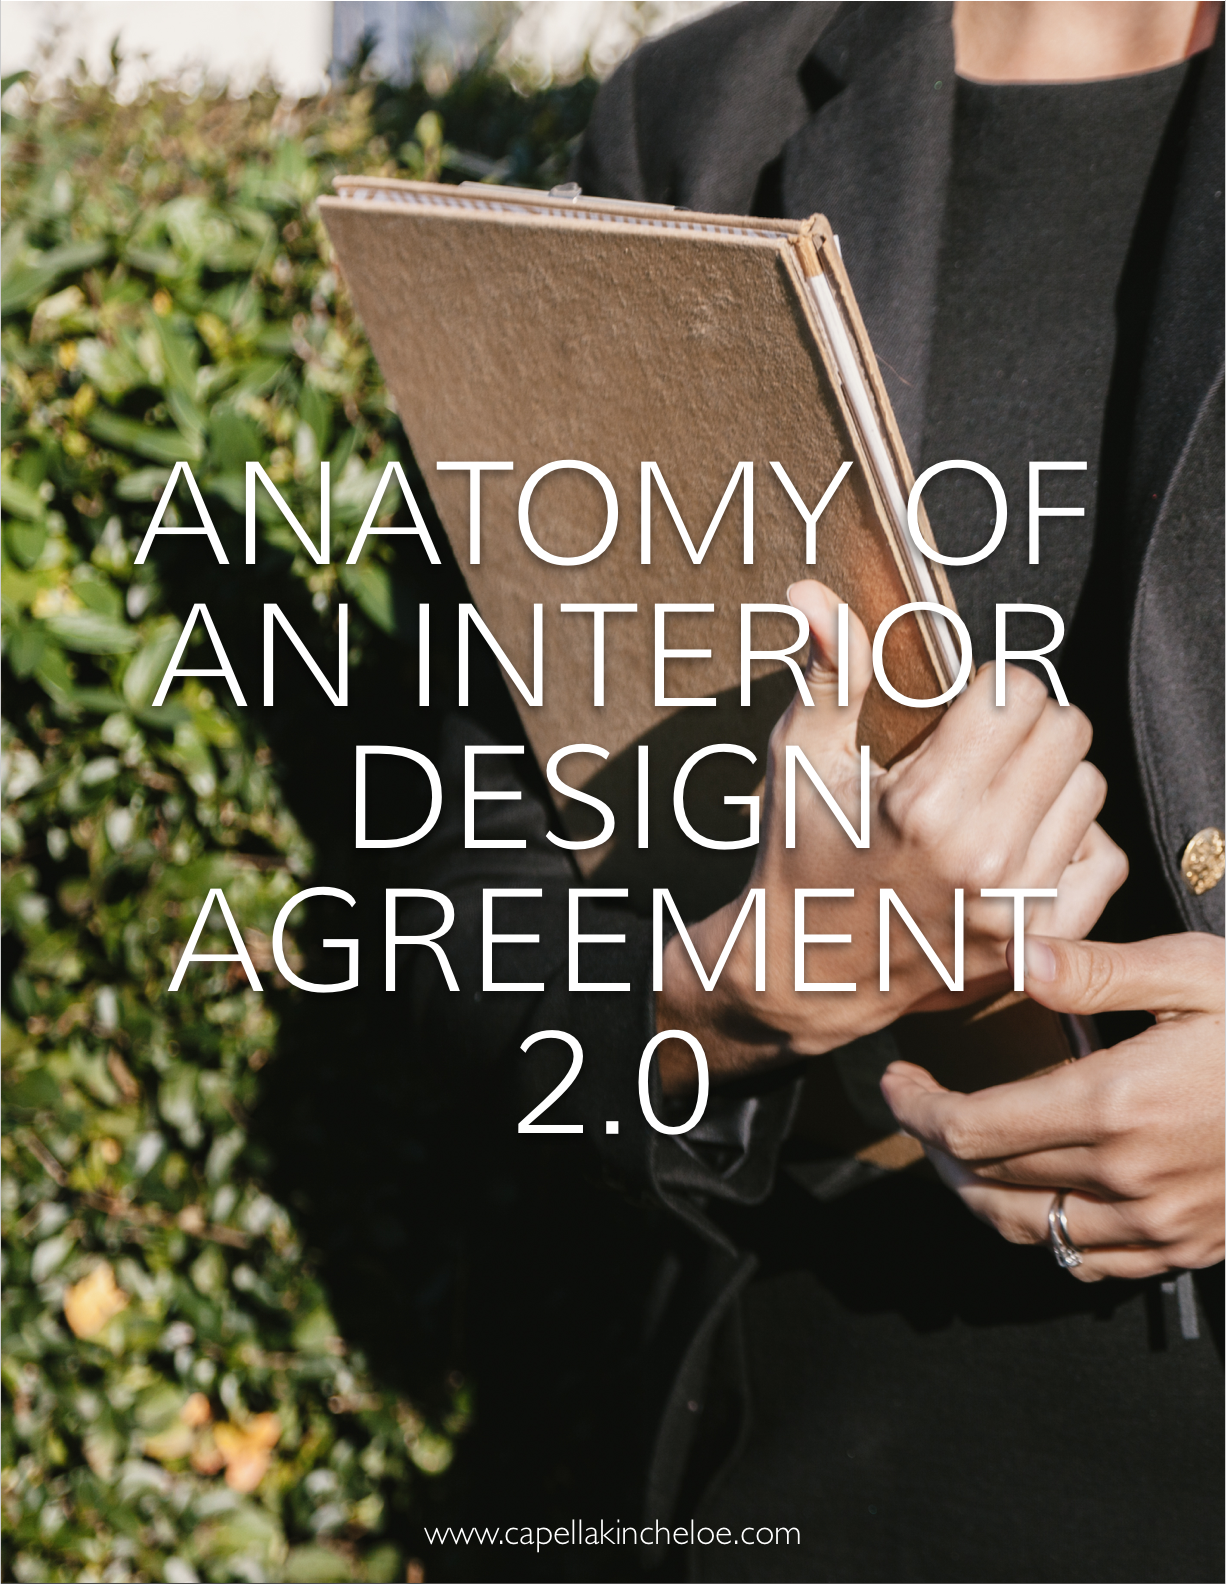 Anatomy of an Interior Design Agreement